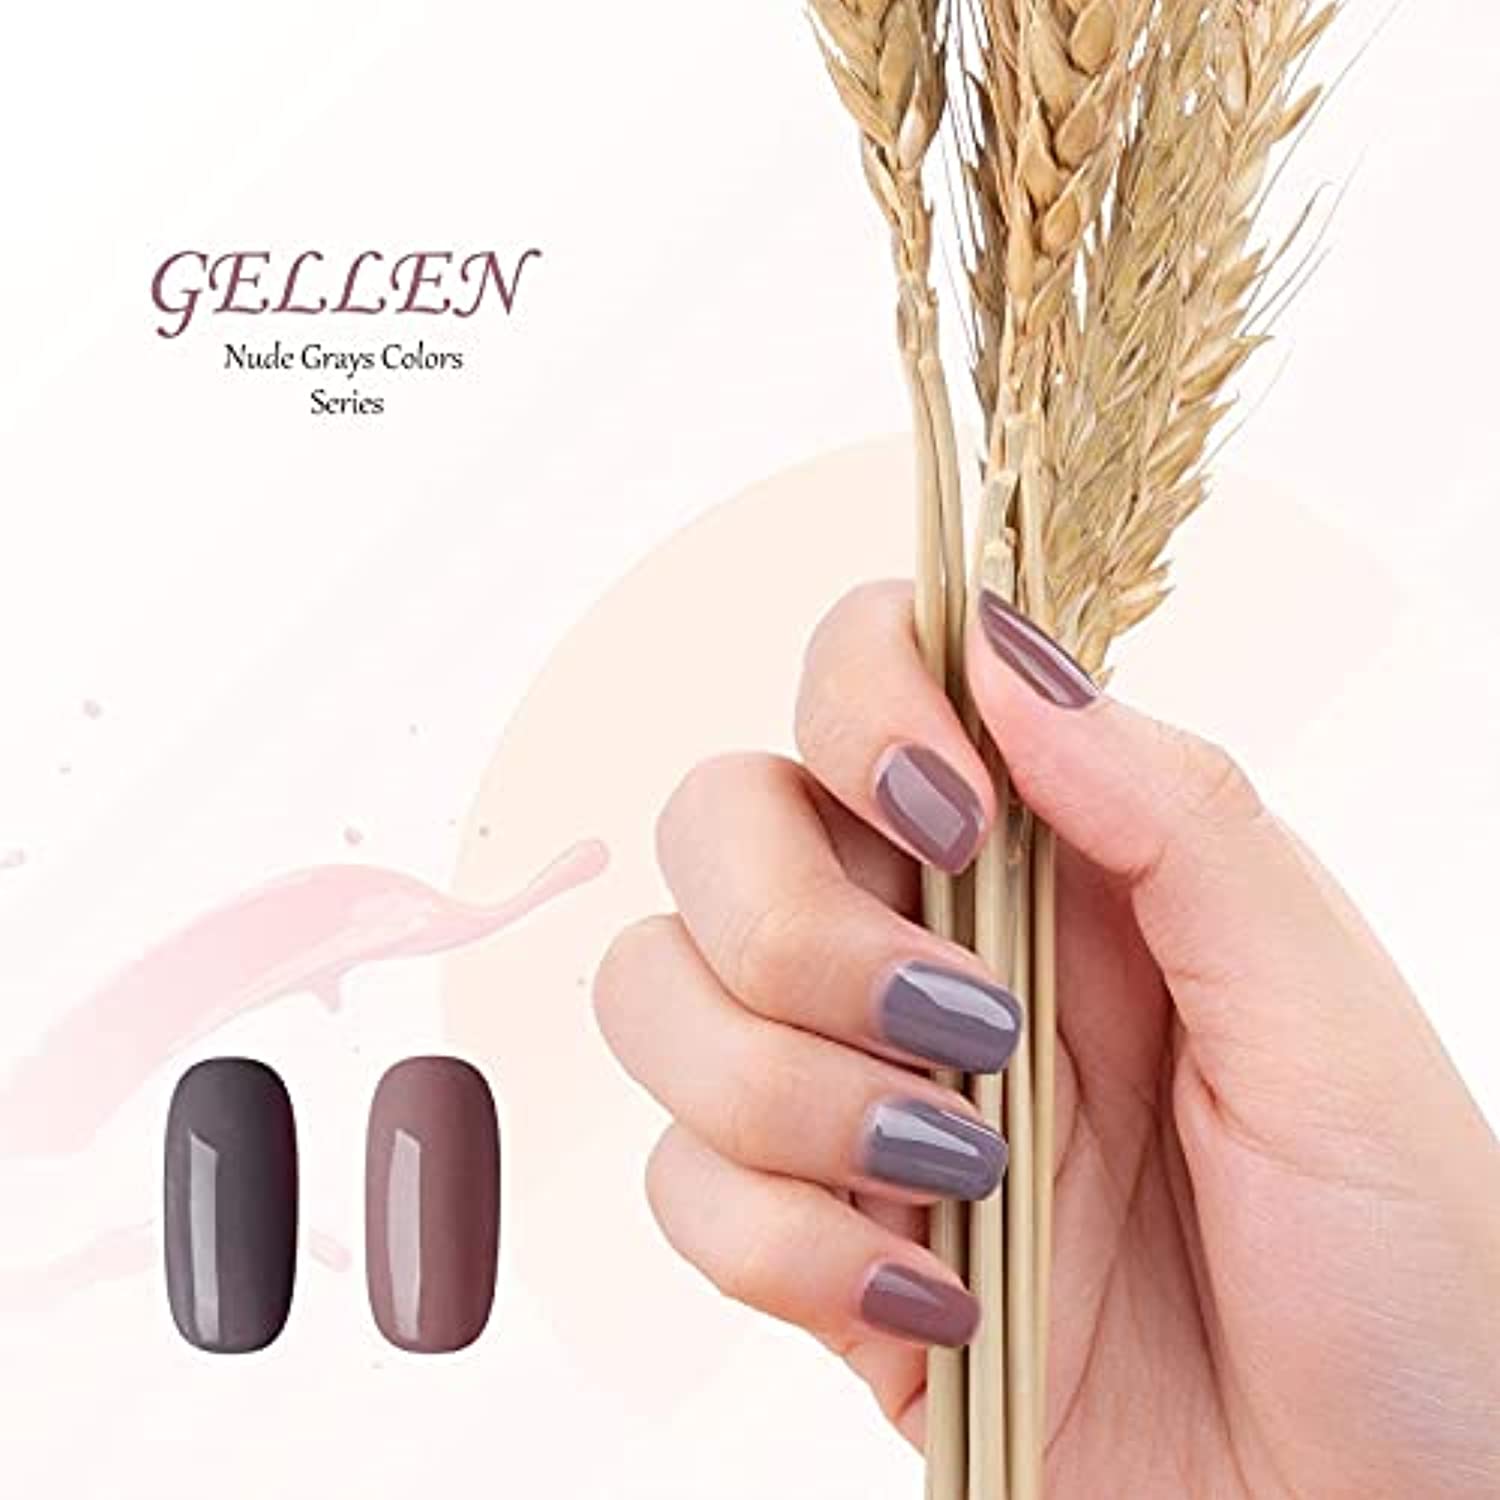 Gellen Gel Nail Polish Kit- Nude Grays 6 Colors, Popular Nail Art Design Classic Pastels Natural Shades Gel Polish Home Gel Manicure Set